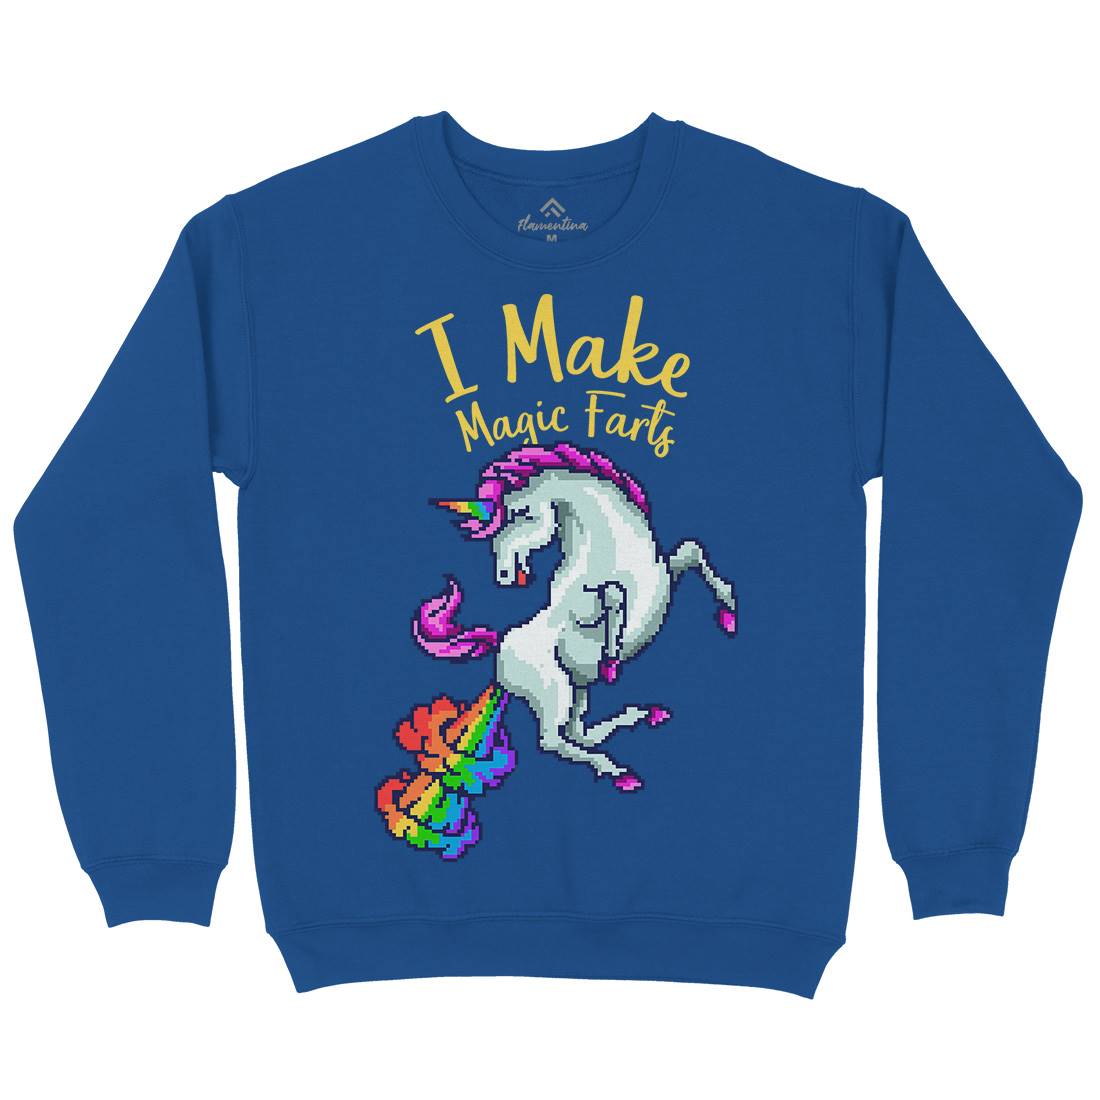 I Make Magic Farts Kids Crew Neck Sweatshirt Retro B915